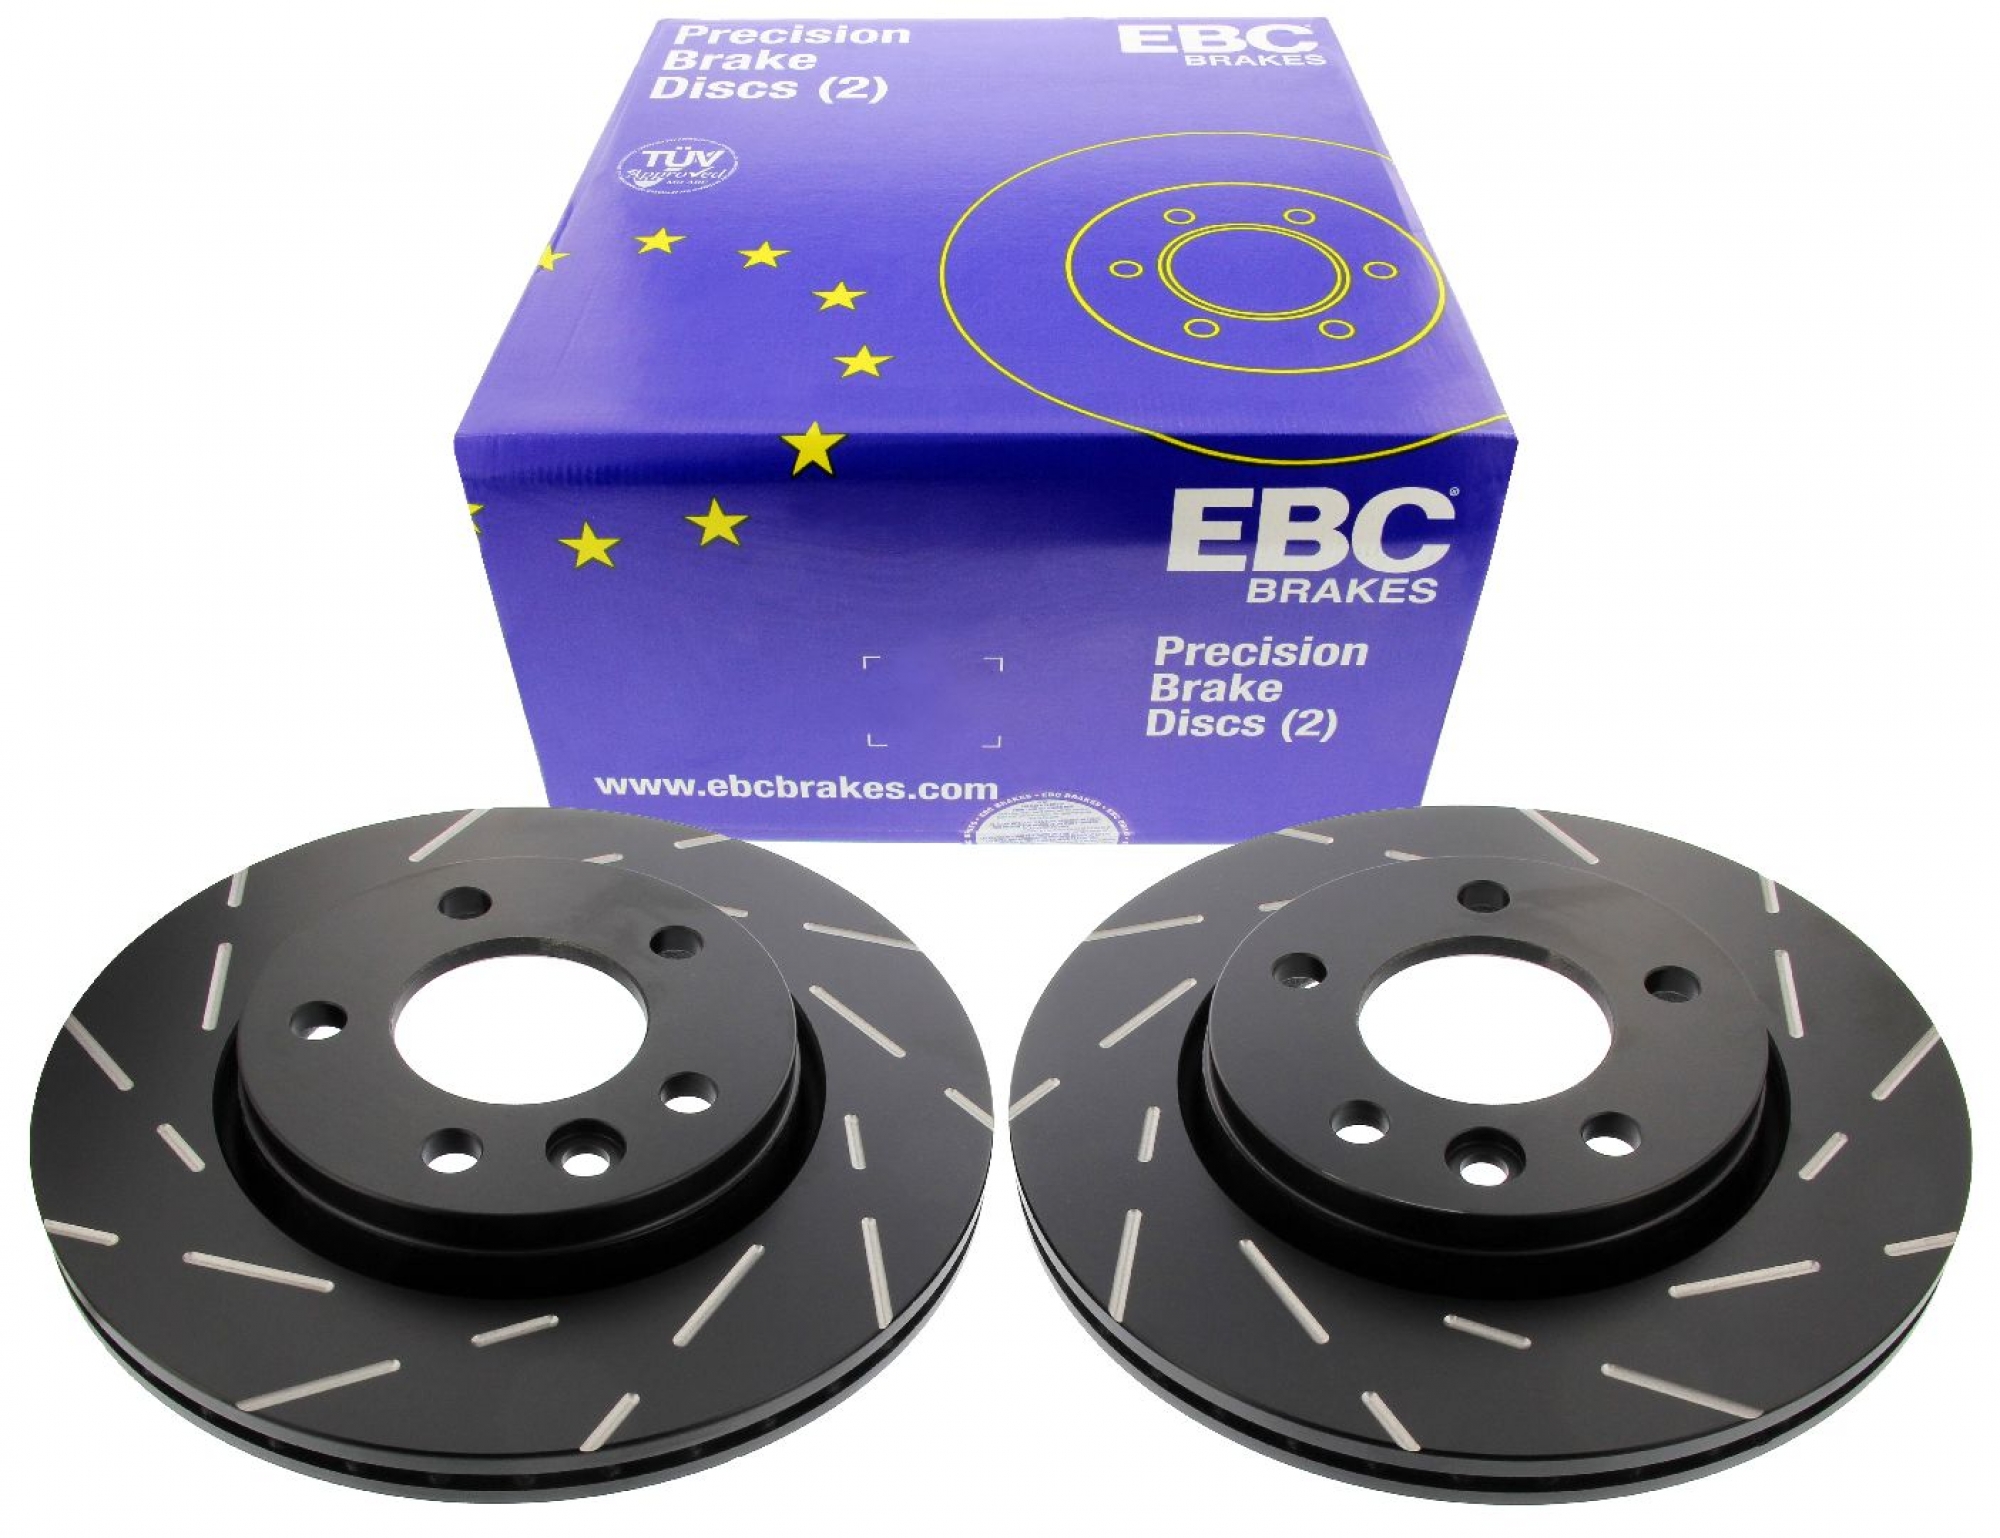 EBC-Bremsscheiben, Black Dash Disc (2-teilig), HA, VW Transporter